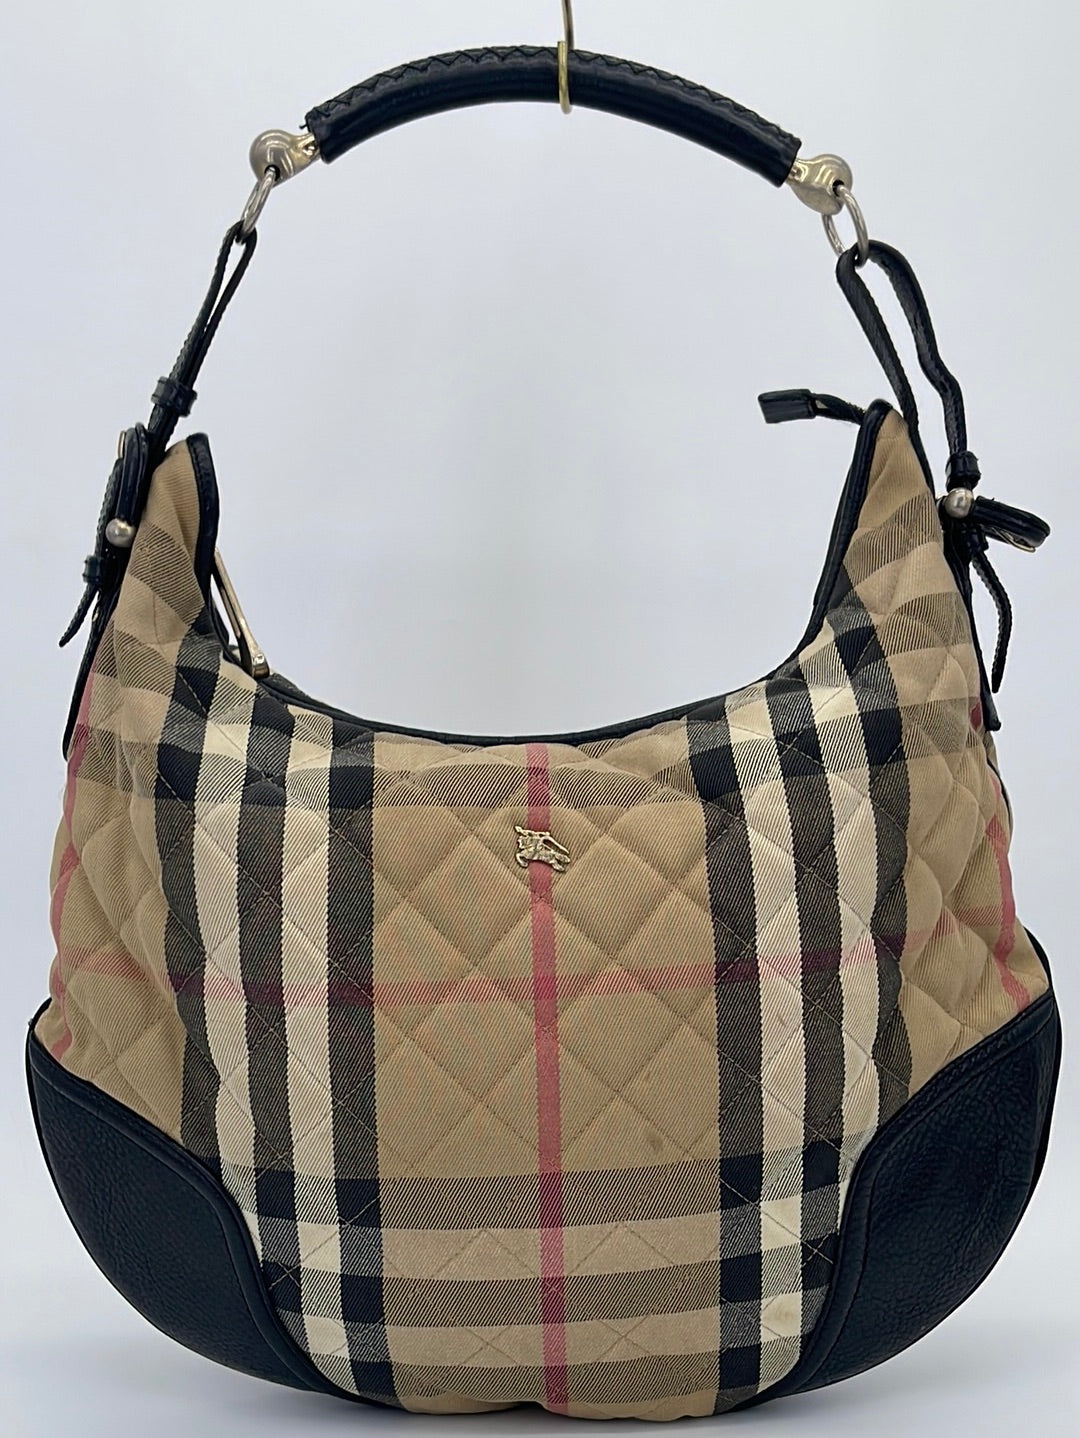 High-end Gift Box] Original Burberry New Pillow Bag Luxury Leather Handbag  Ladies' Party Shoulder Bag 20*14*11CM